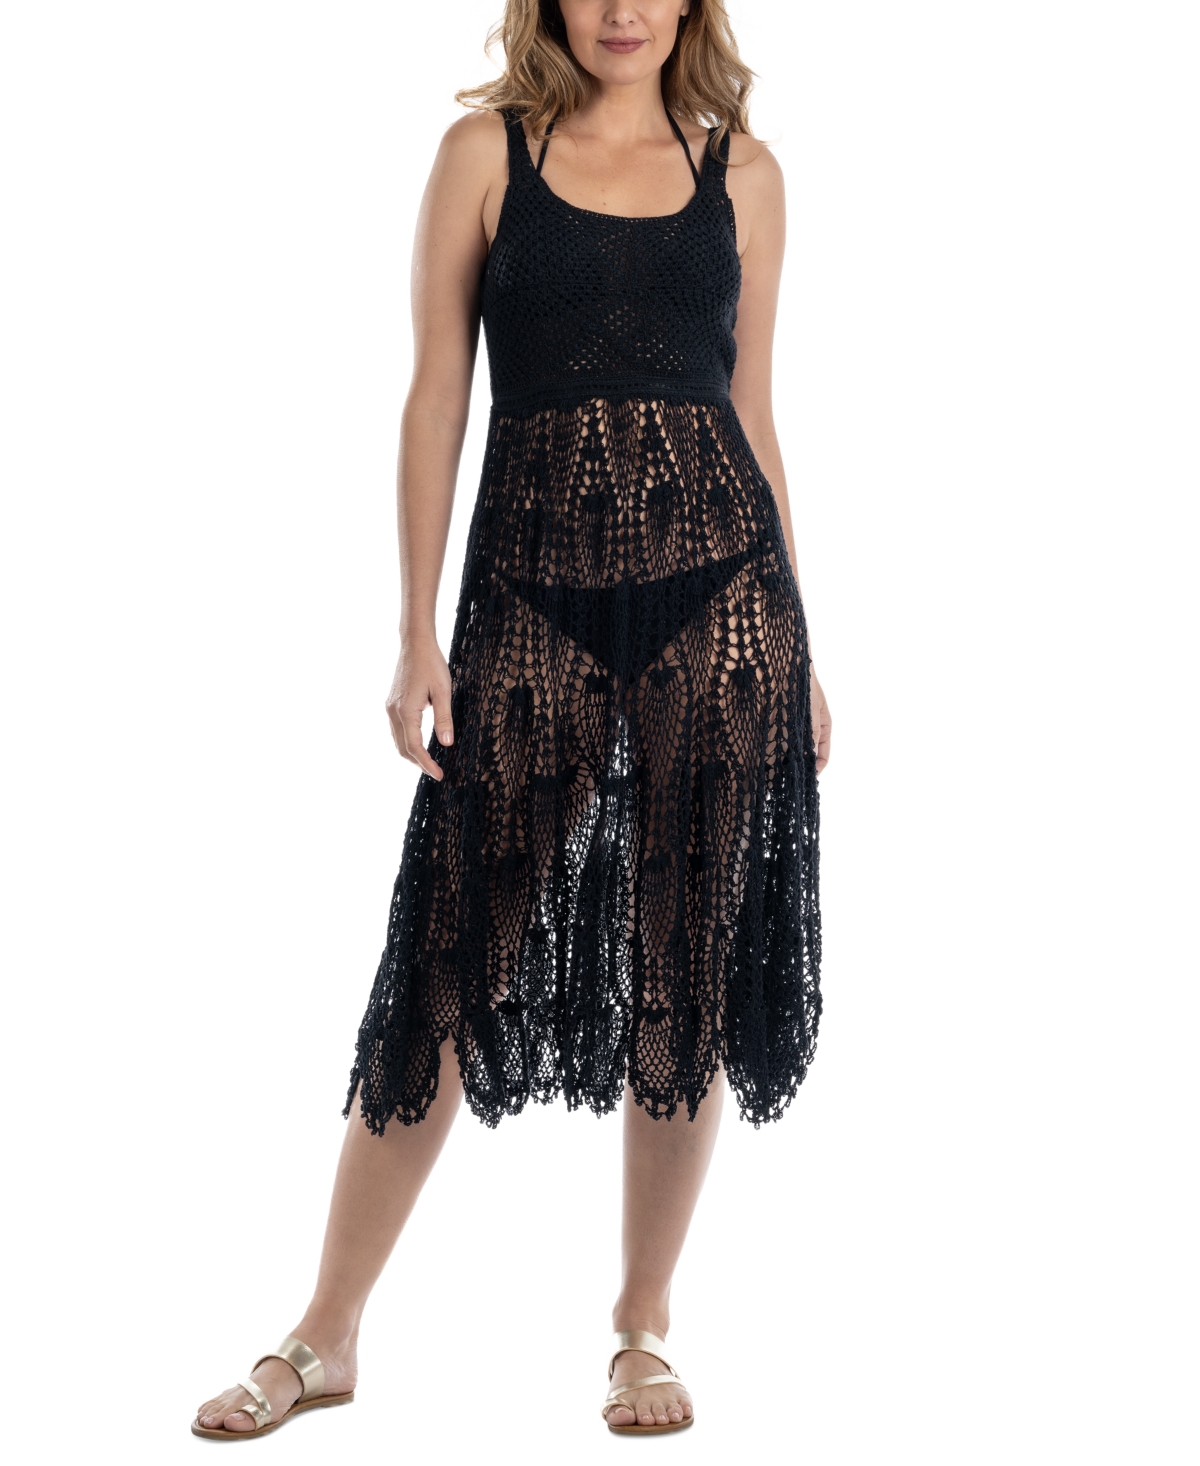 Women's Cotton Crochet Sleeveless Cover-Up Dress - Black